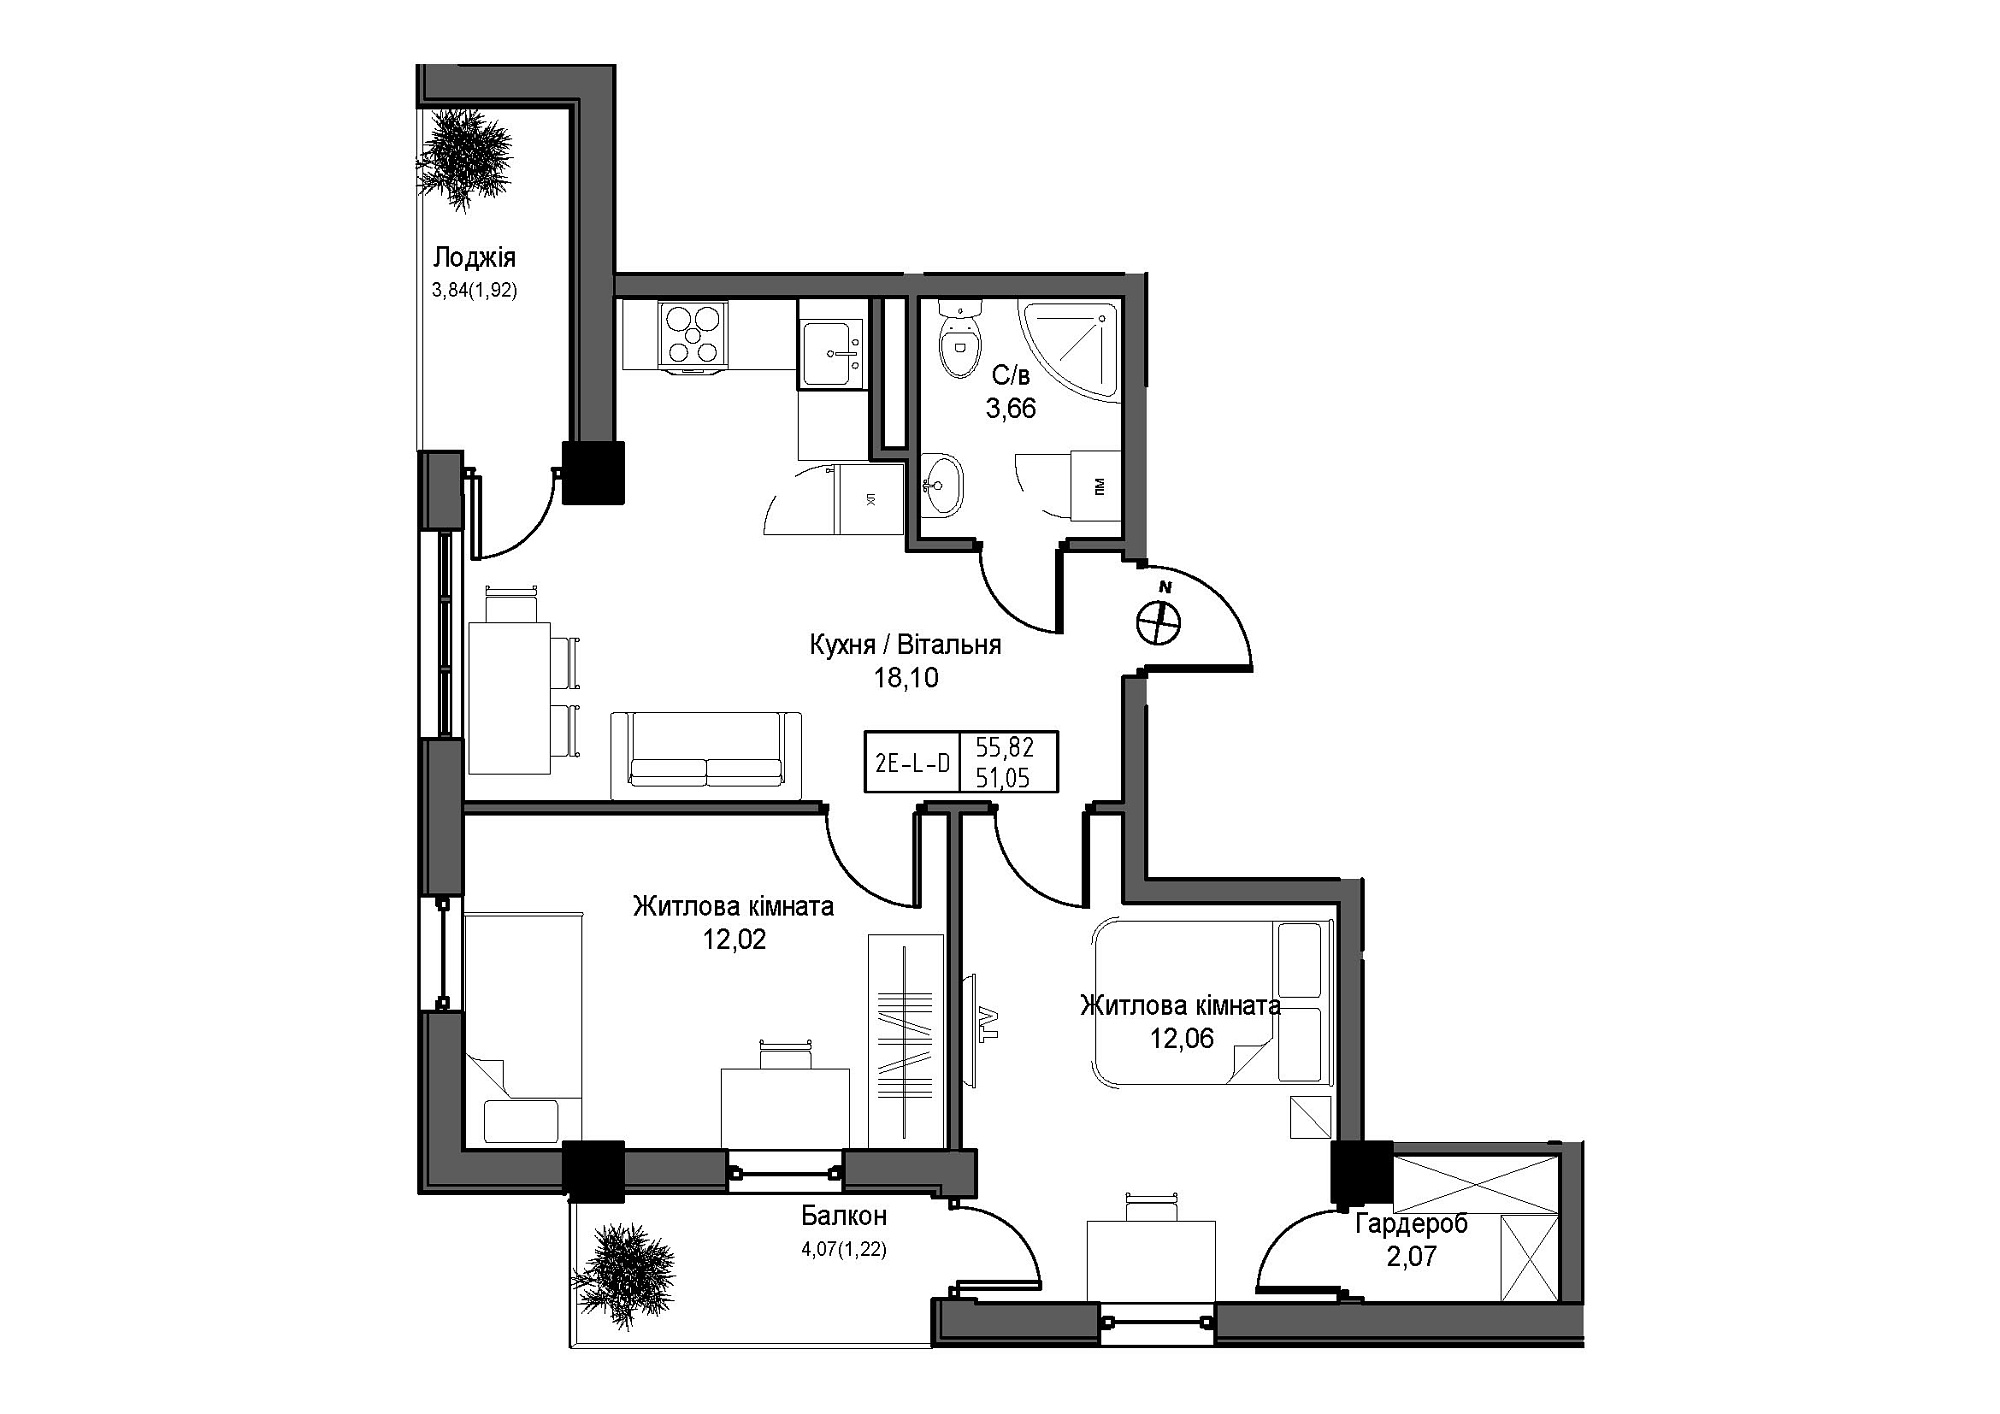 Планування 2-к квартира площею 51.05м2, UM-007-09/0011.